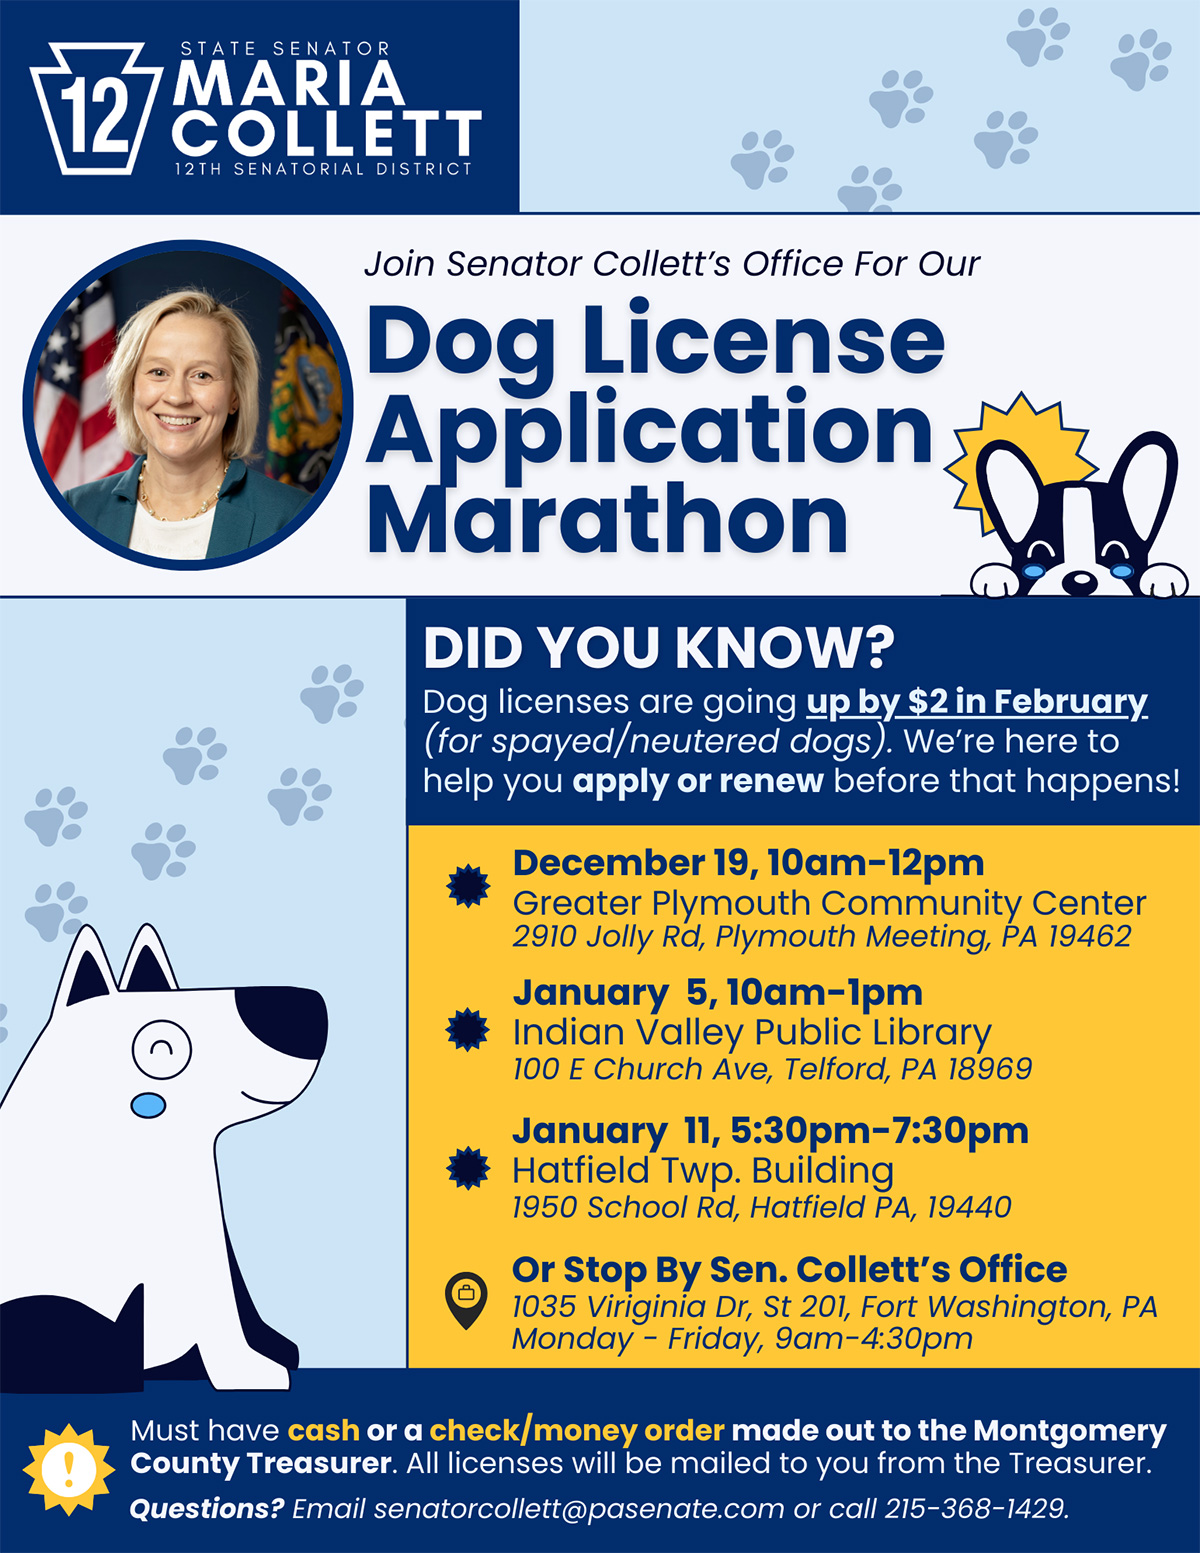 Dog Licensing Application Marathon